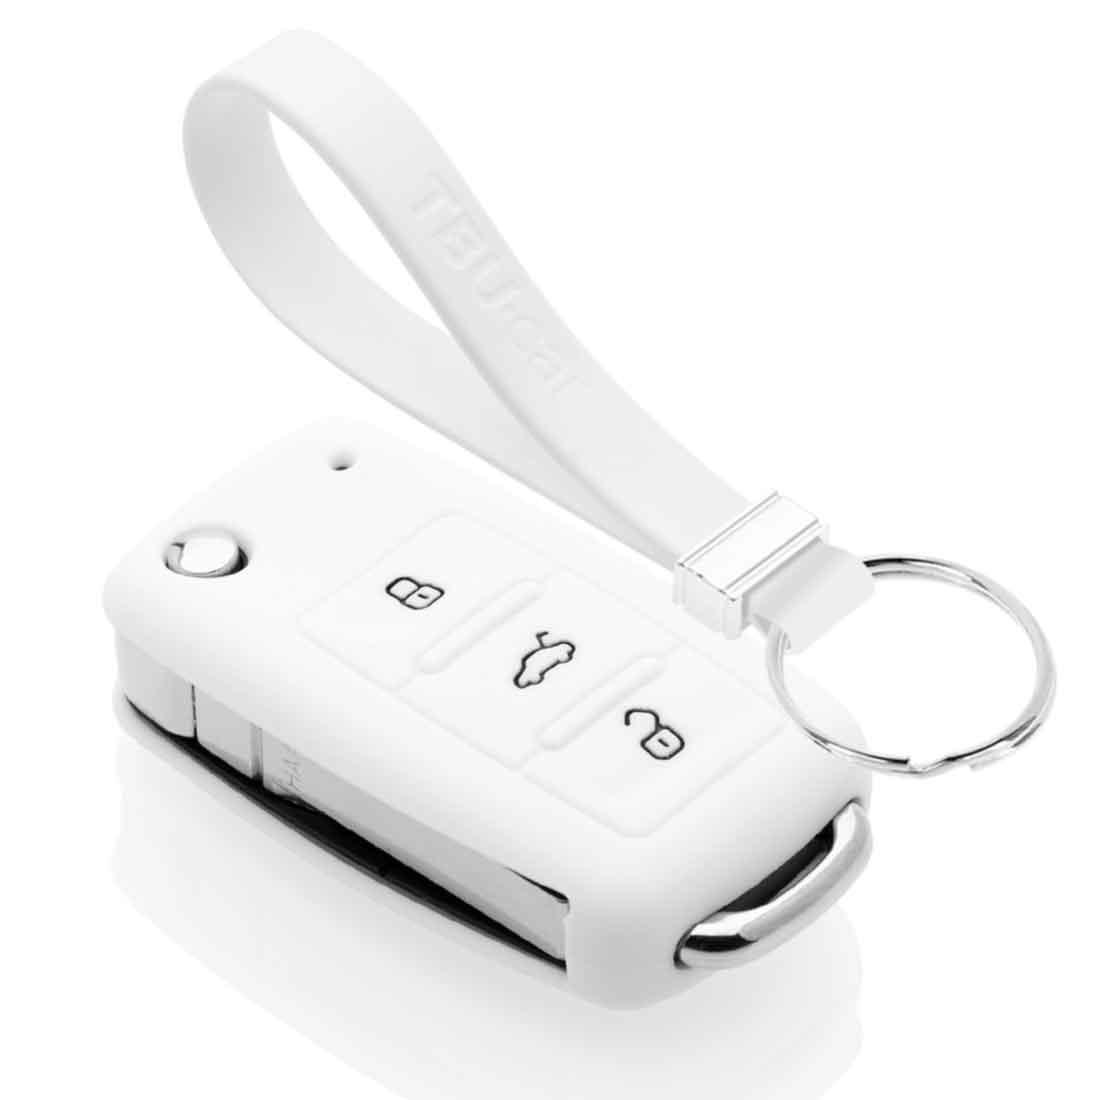 Renault Schlüssel Gehäuse - Autoschlüssel Hülle - Autoschlüssel Gehäu